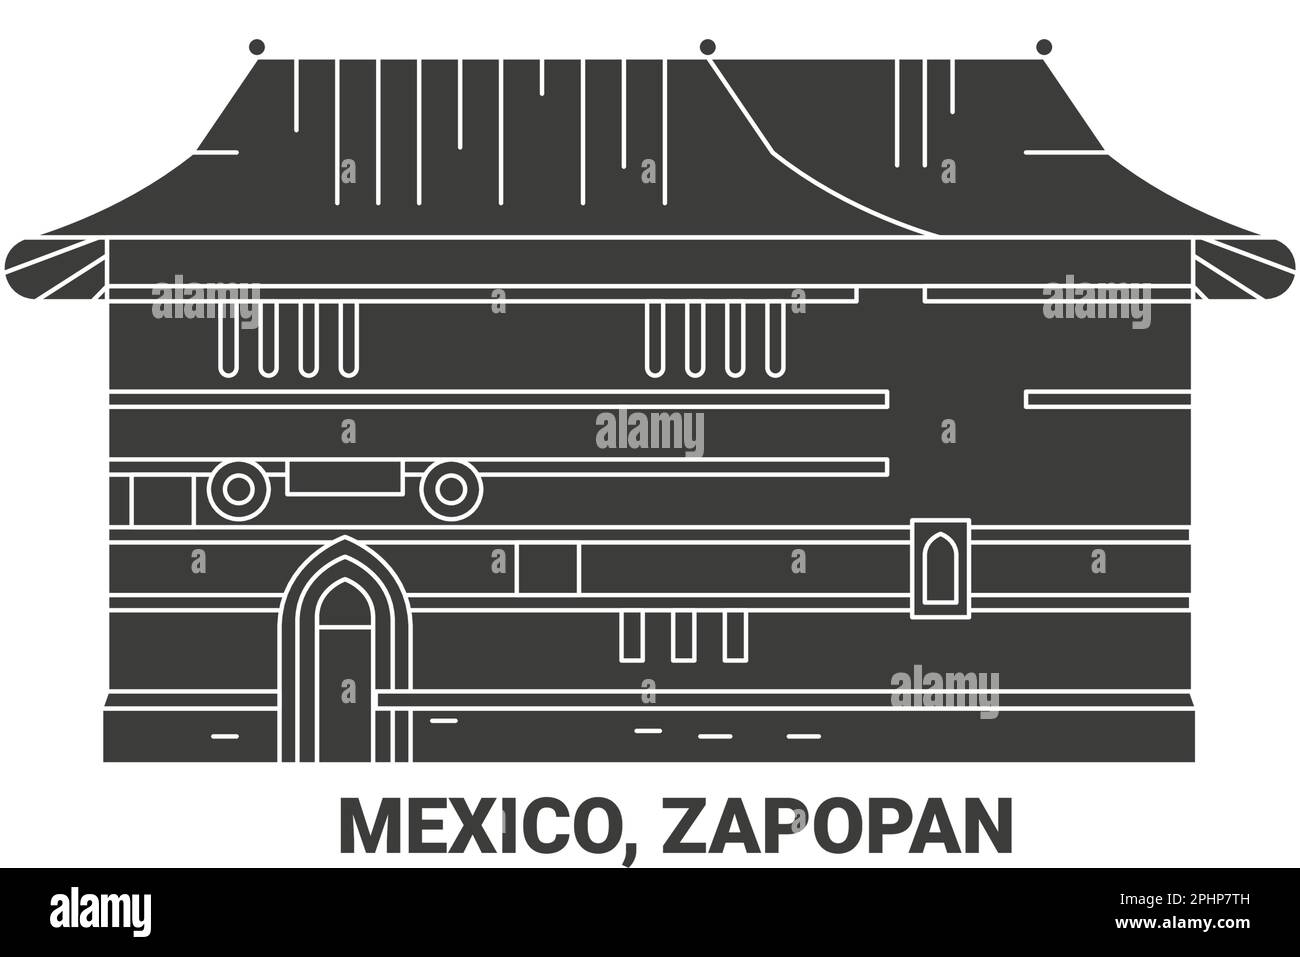 Mexico, Zapopan travel landmark vector illustration Stock Vector